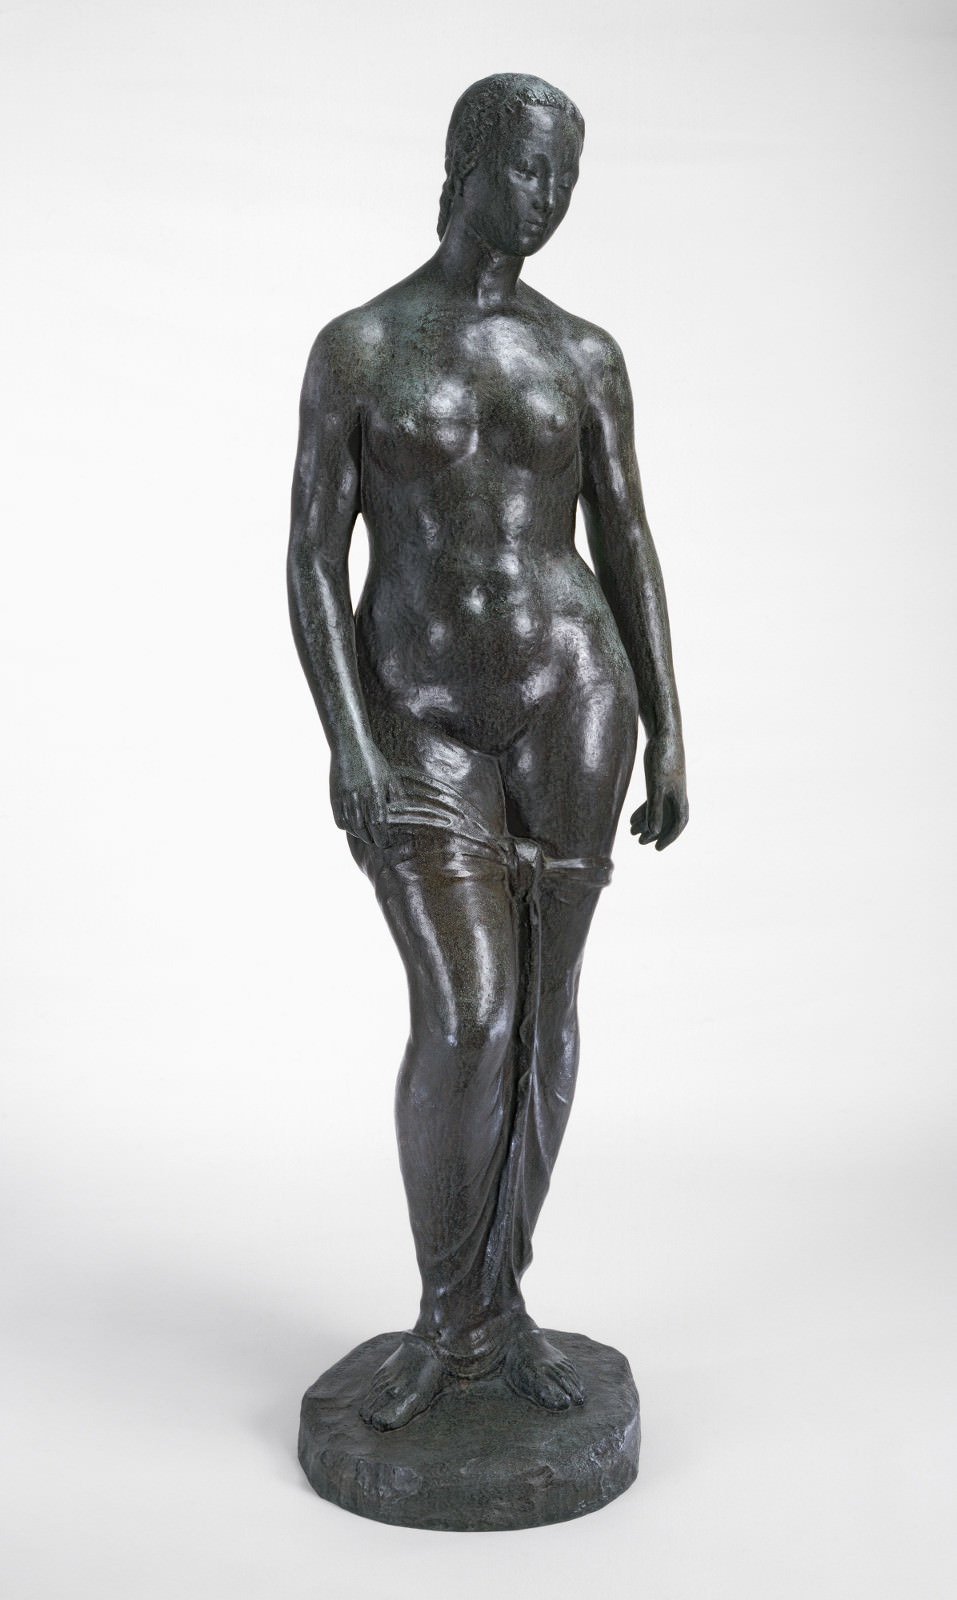 Fig. 3 – Standing Woman, Wilhelm Lehmbruck, 1910, bronze, 191.2 x 54 x 39.9 cm. National Gallery of Art, Washington. Ailsa Mellon Bruce Fund.